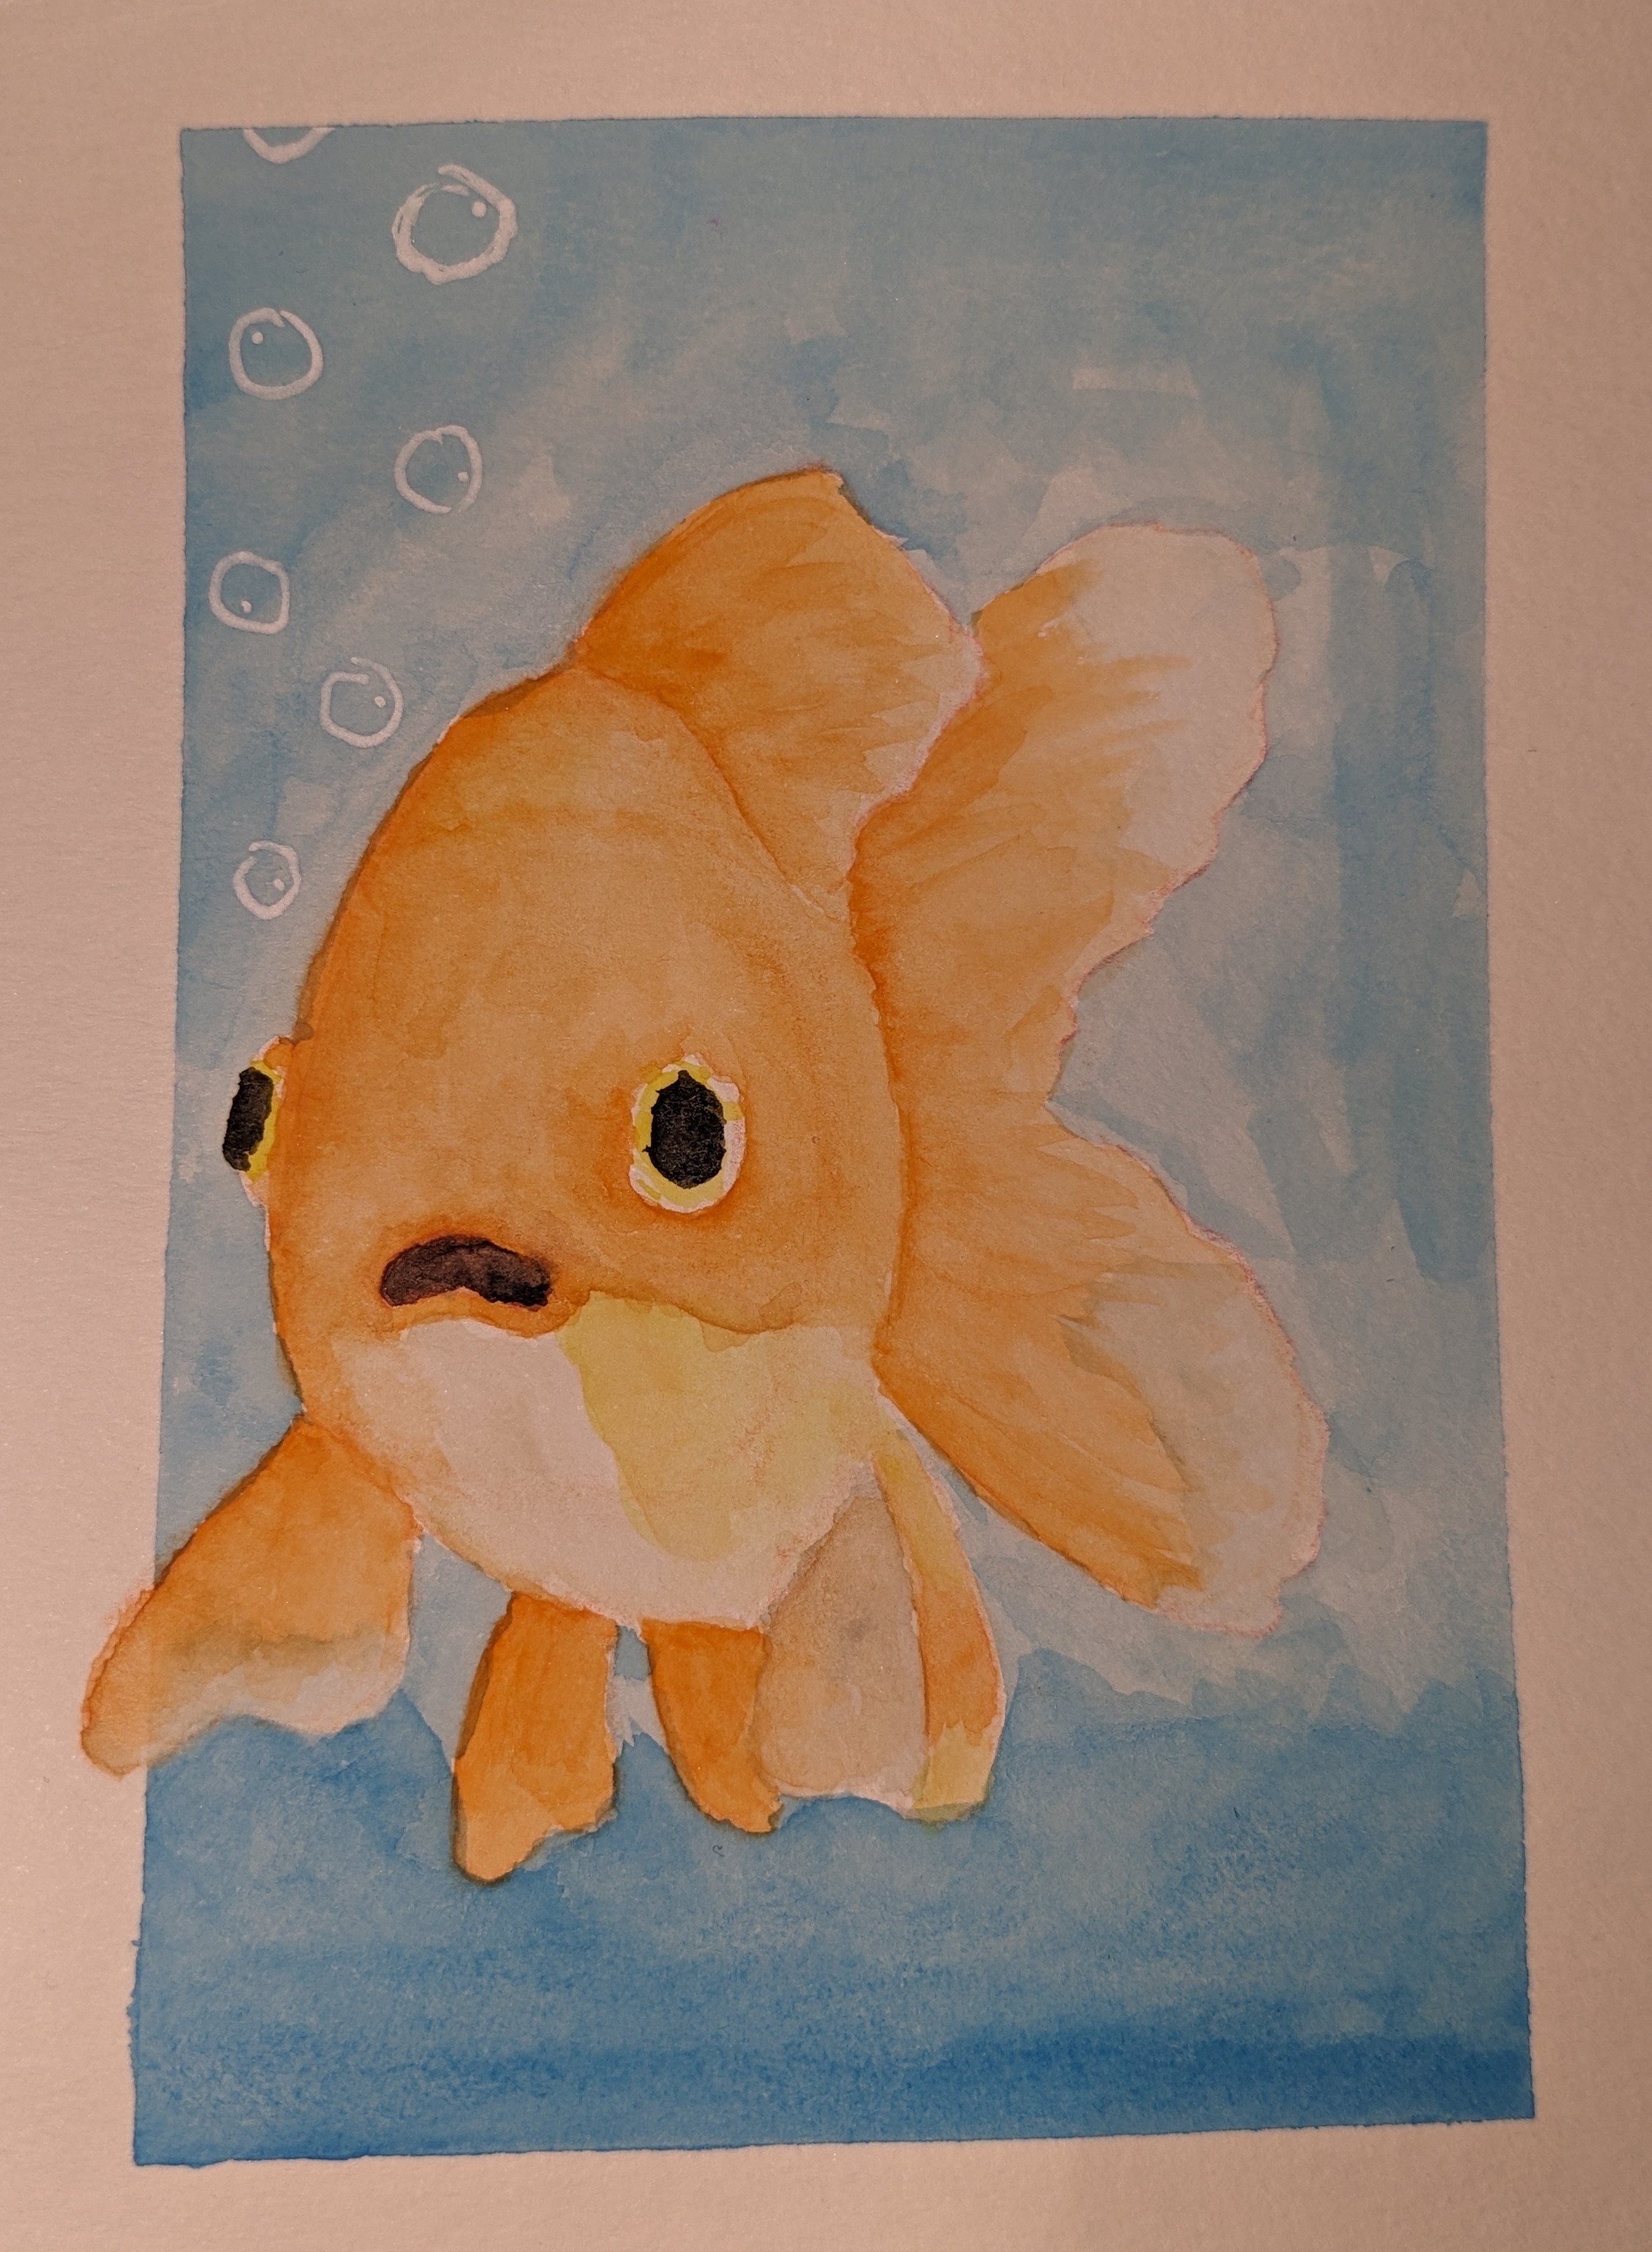 Artwork of a goldfish swimming